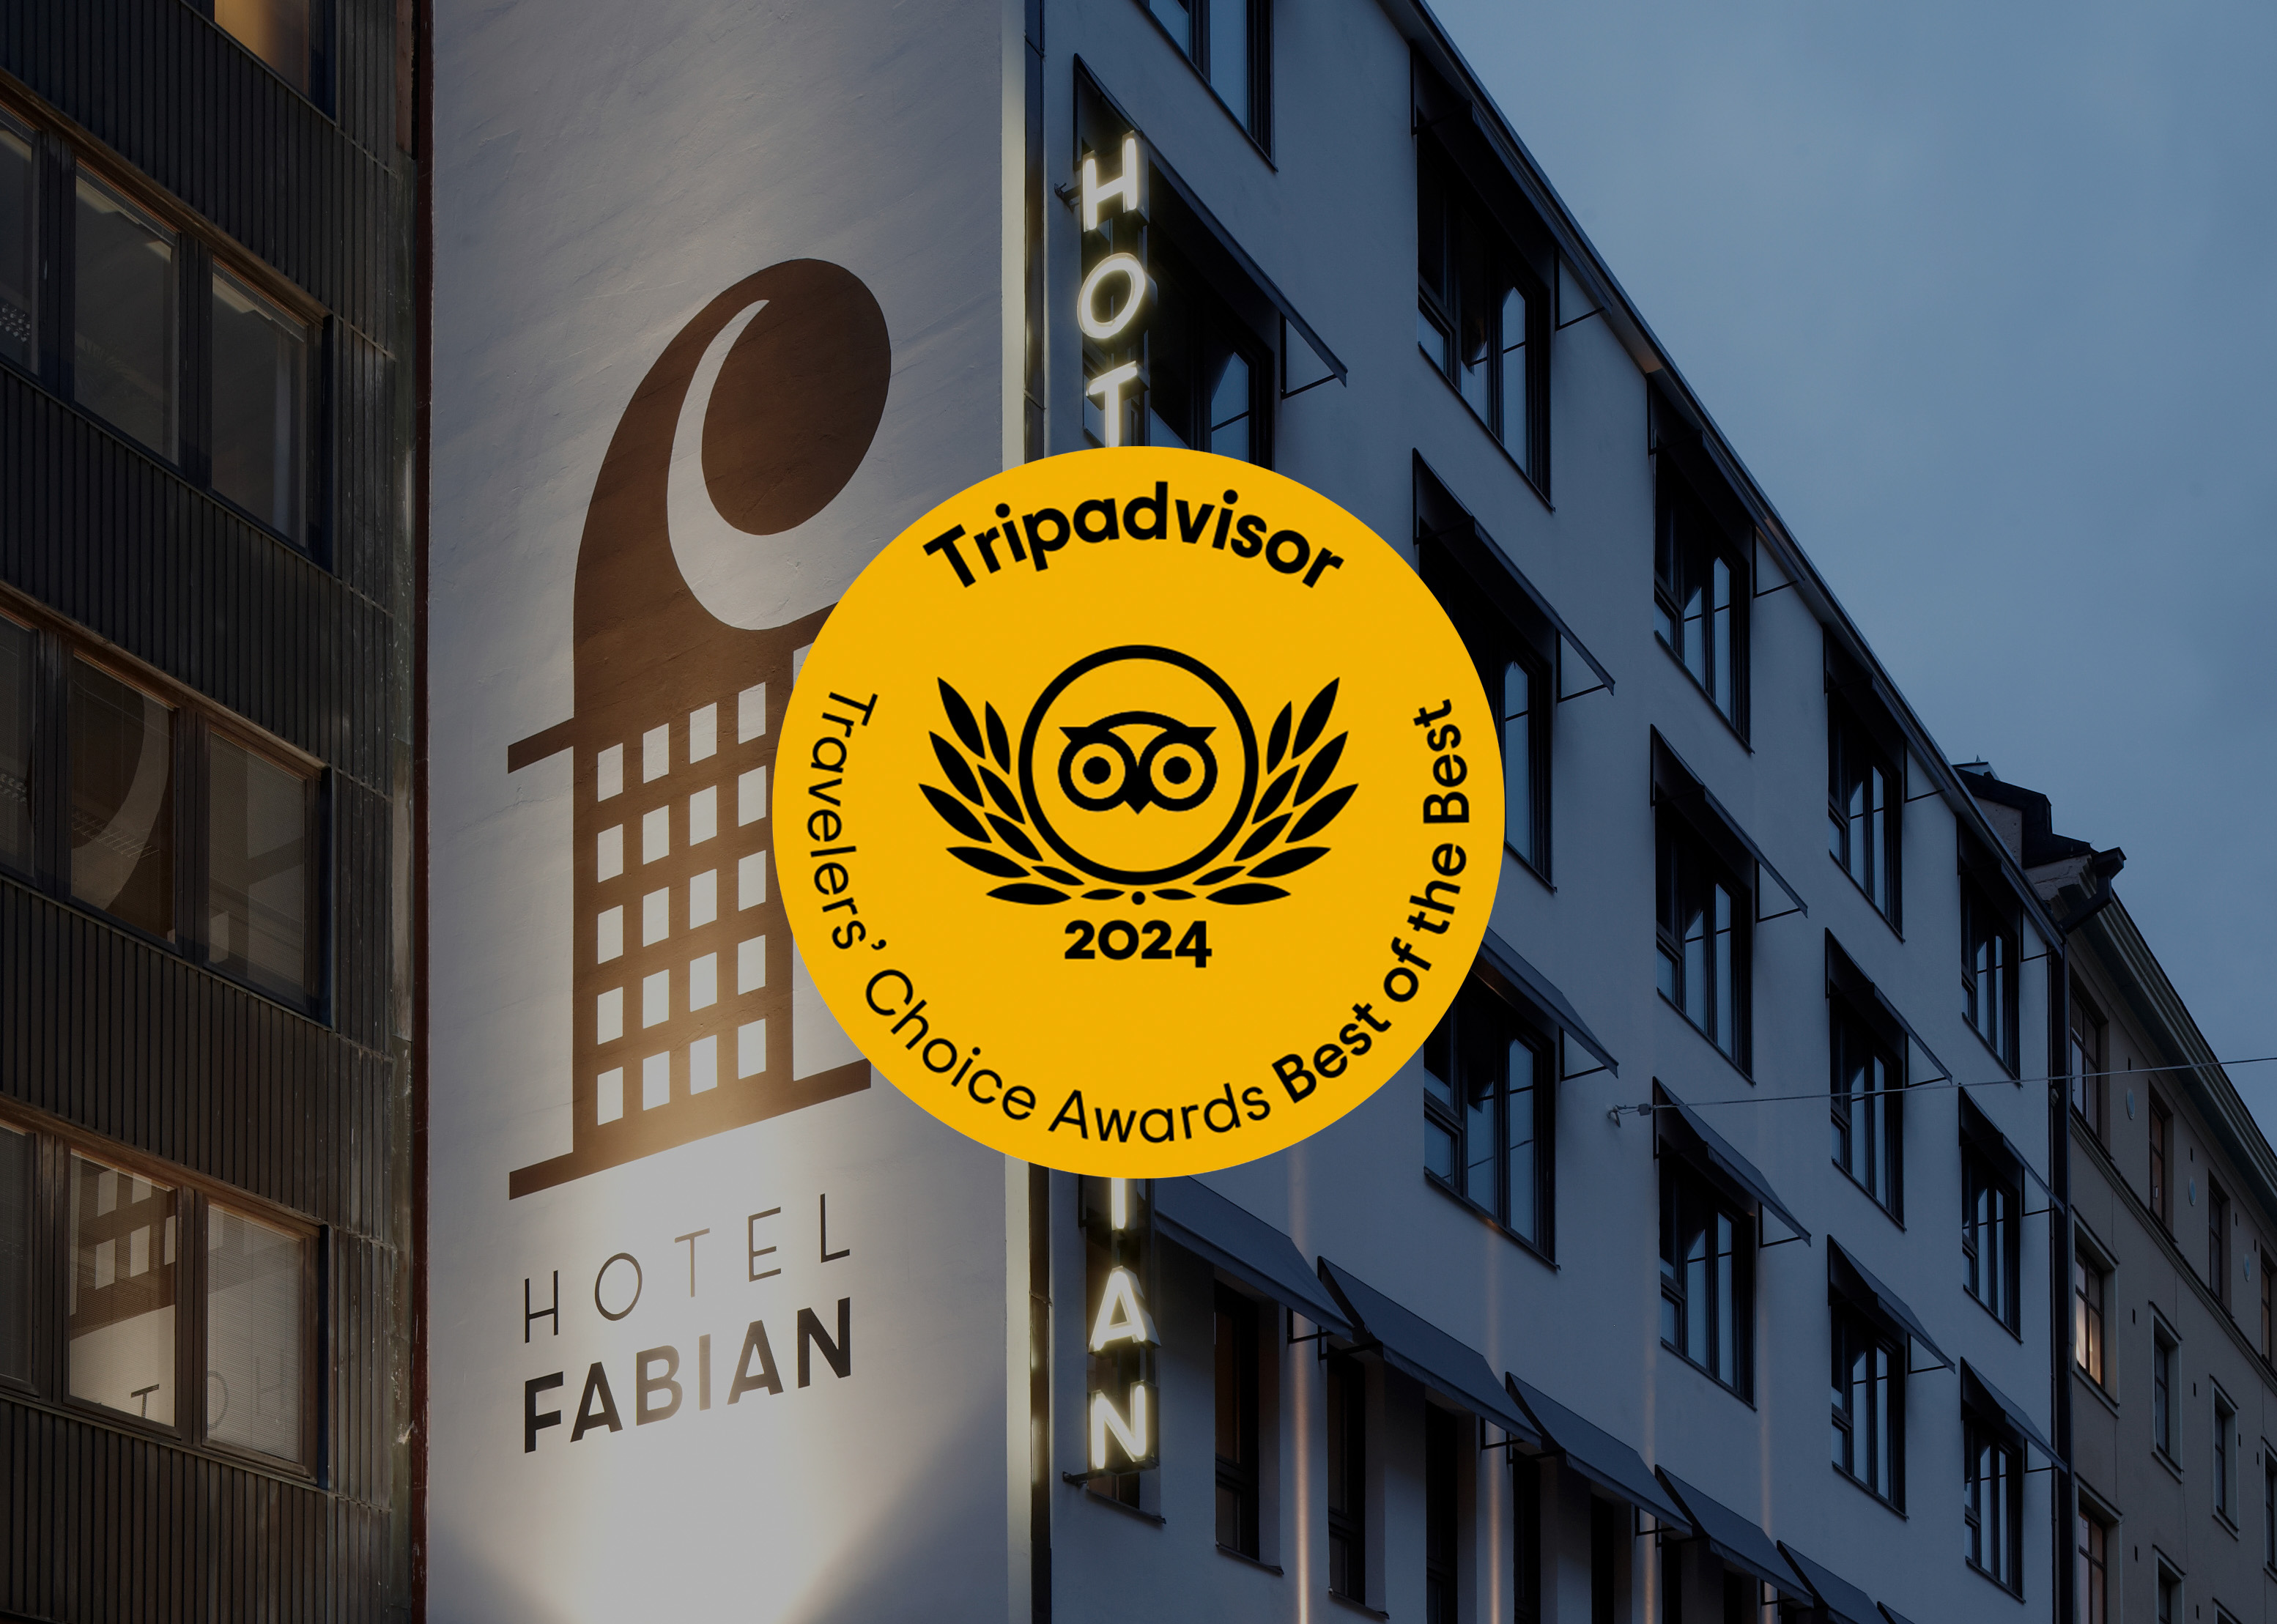 Hotel_Fabian_Exterior_2_tripadvisor travelers choice awards 2024